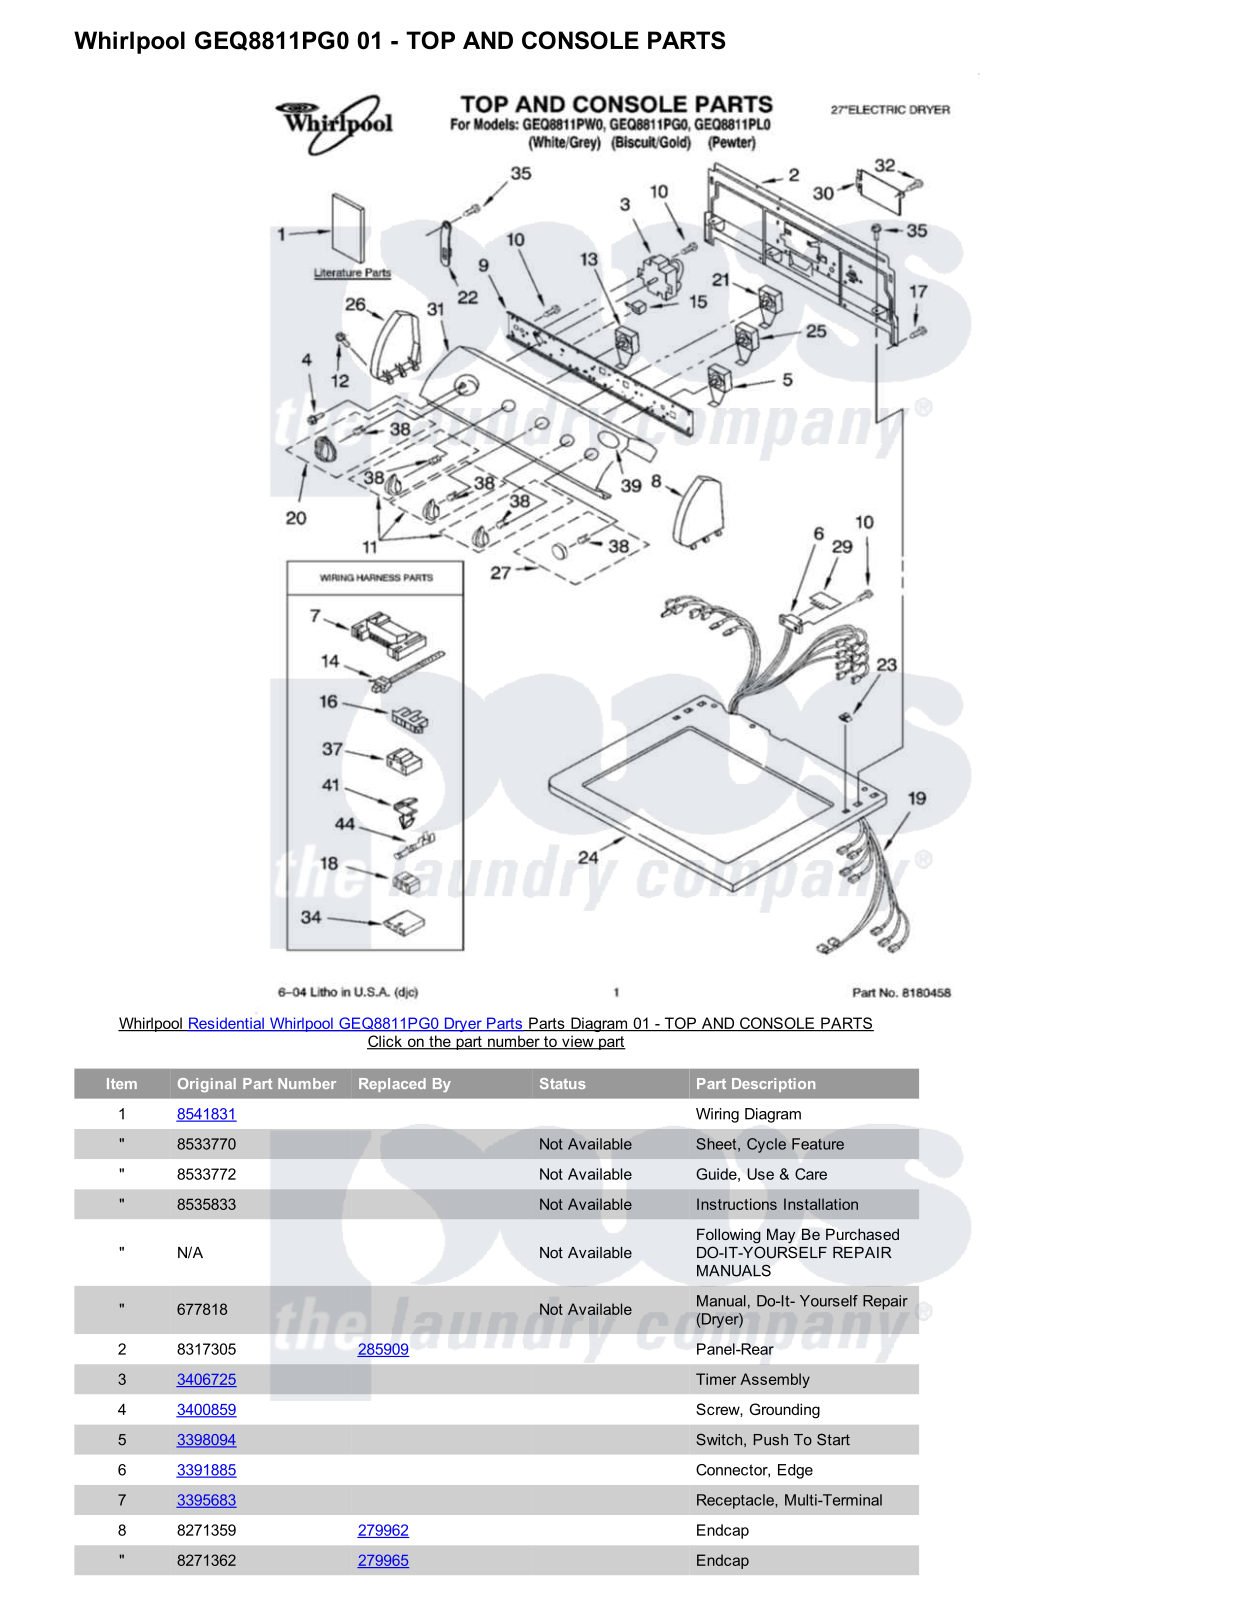 Whirlpool GEQ8811PG0 Parts Diagram